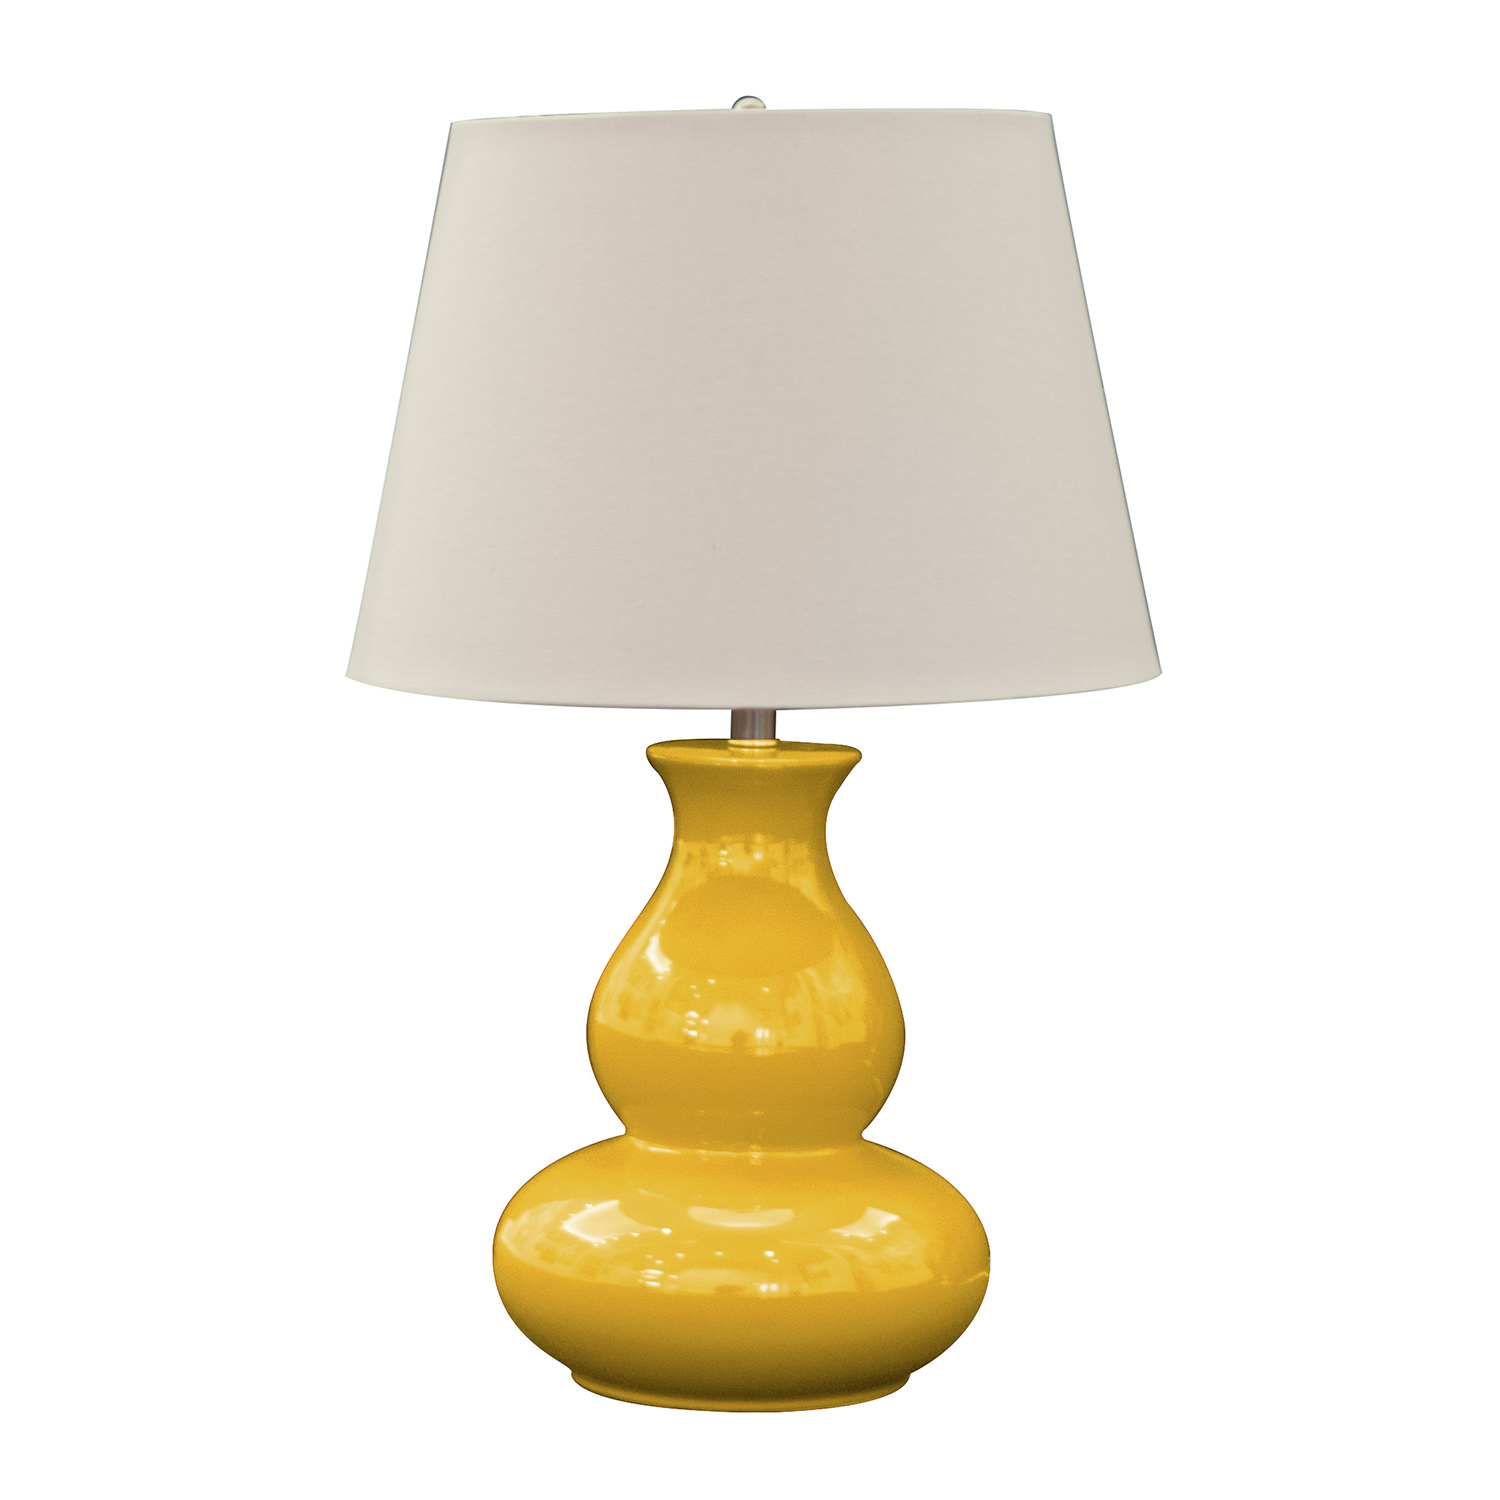 Ren-Wil Sunrise Table Lamp - Mustard Yellow